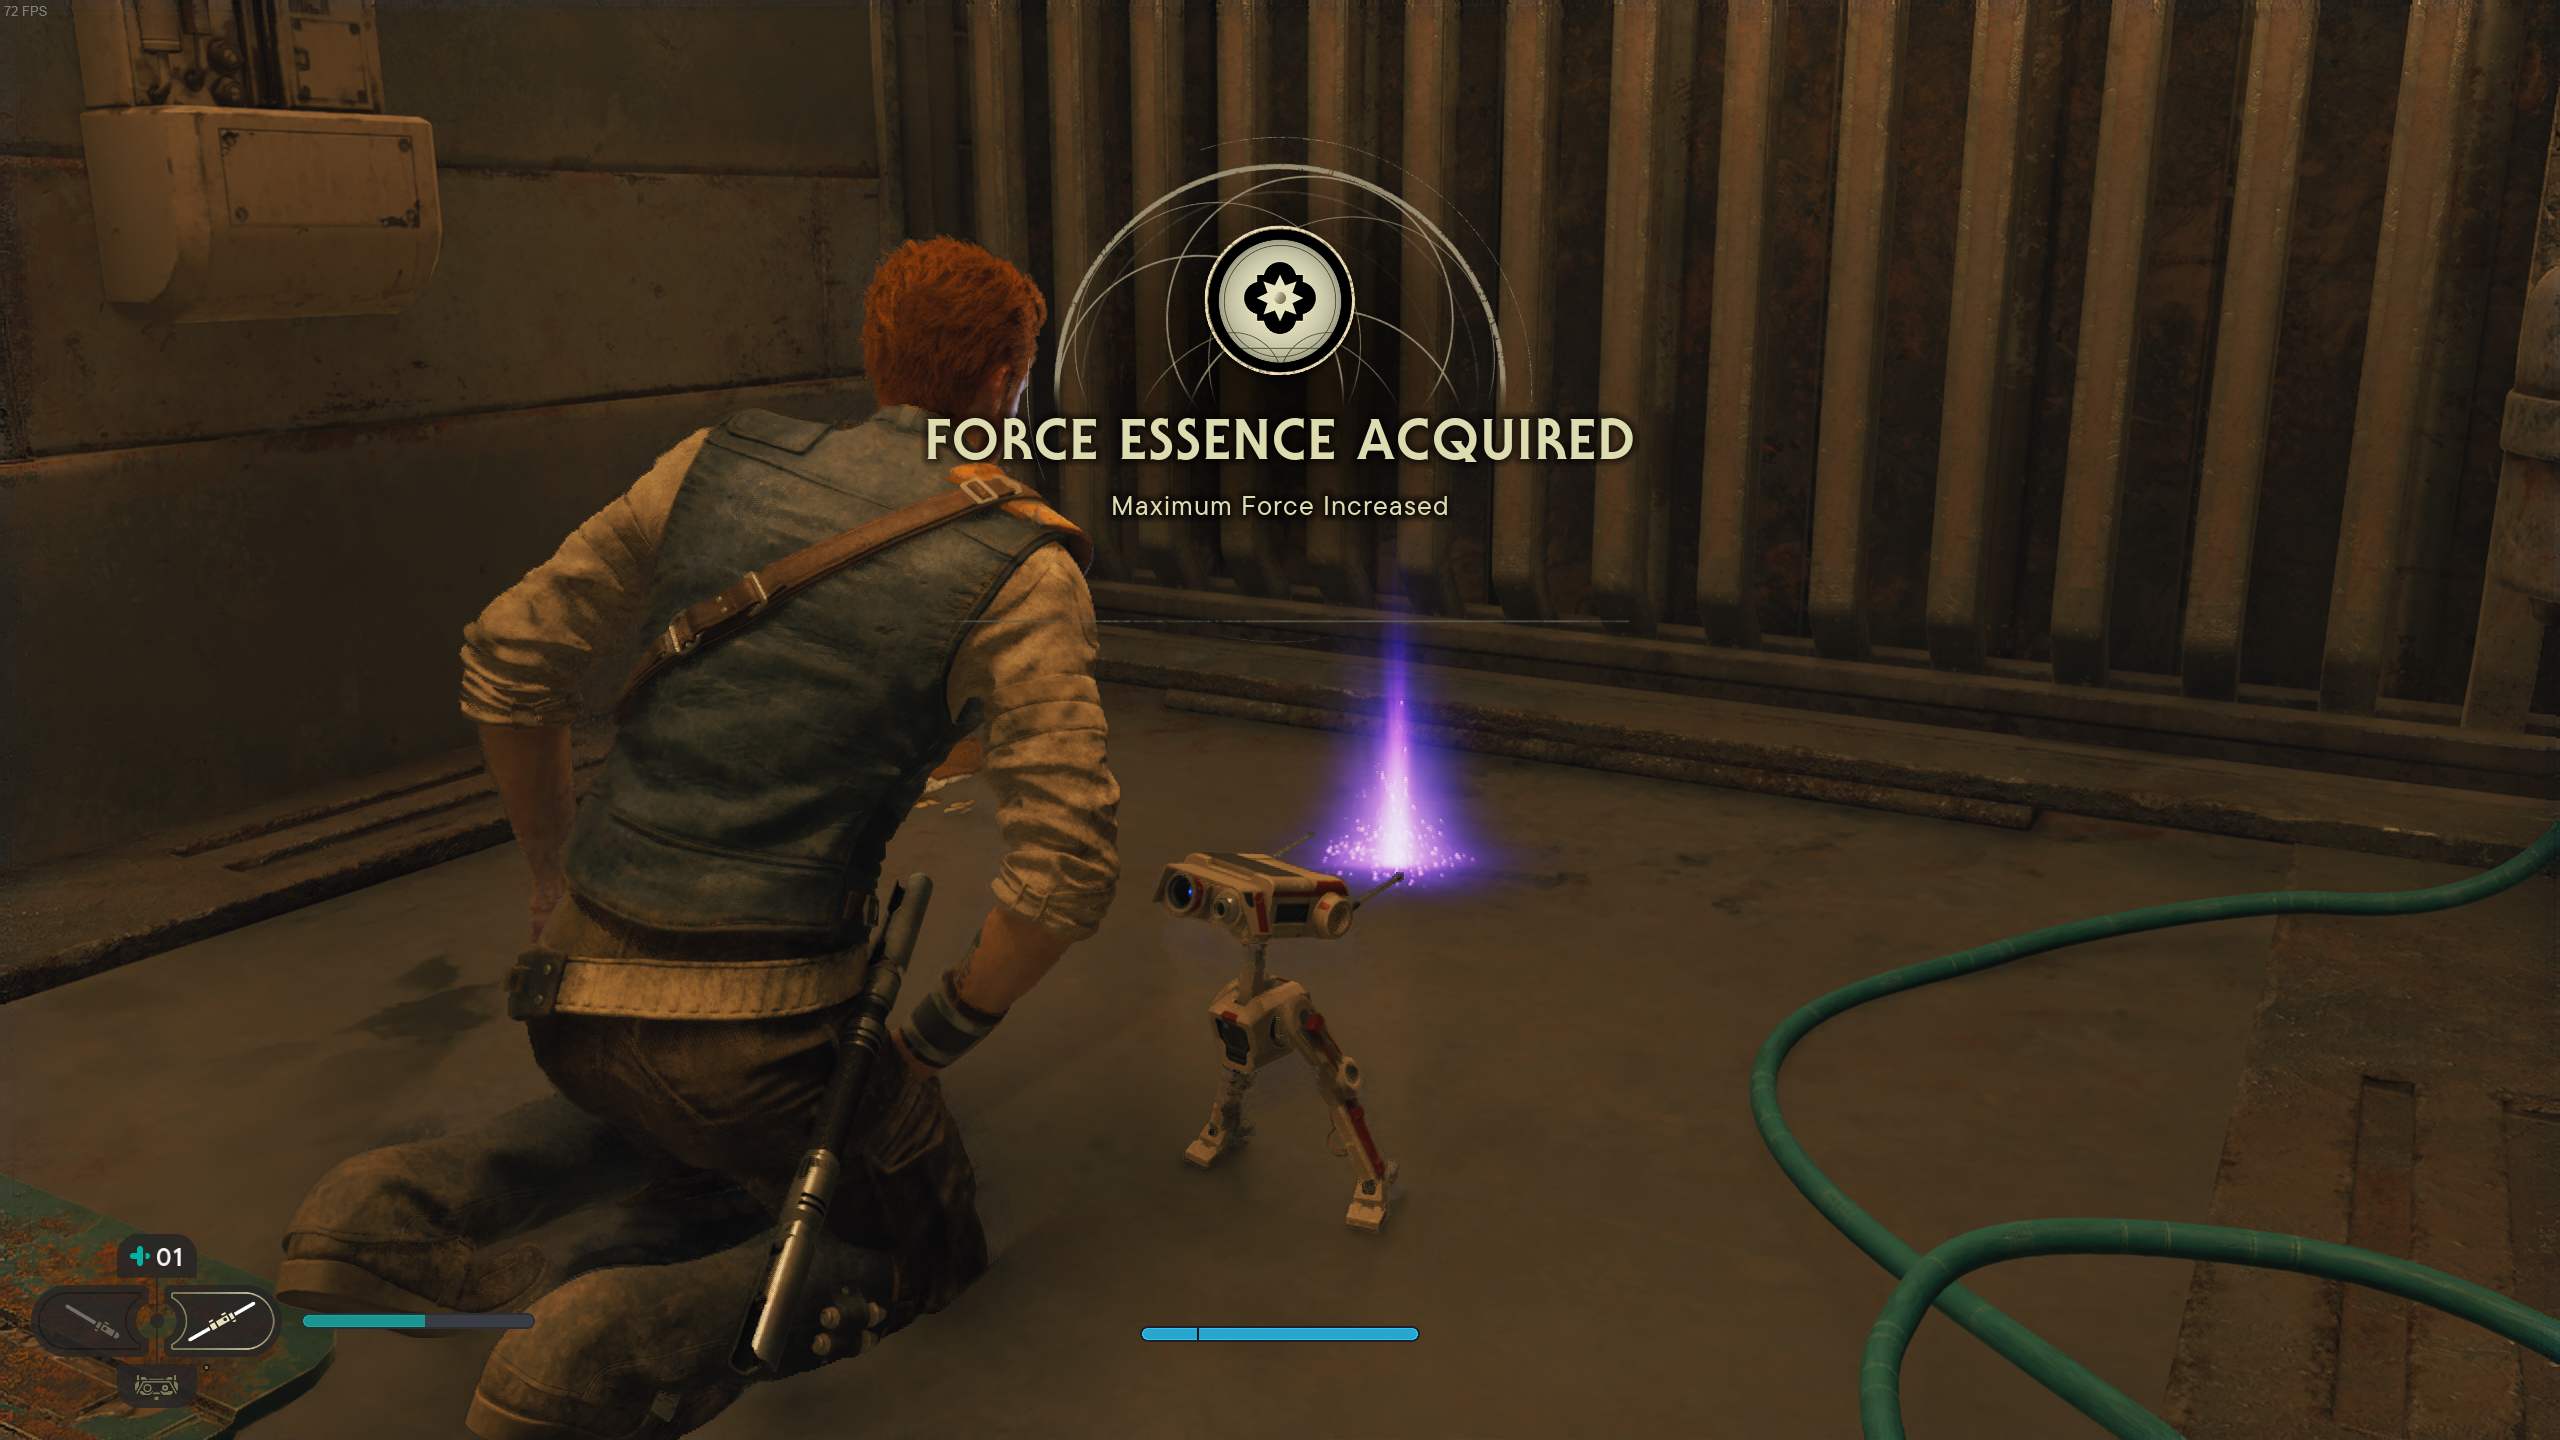 increase your maximum Force in Star Wars Jedi: Survivor